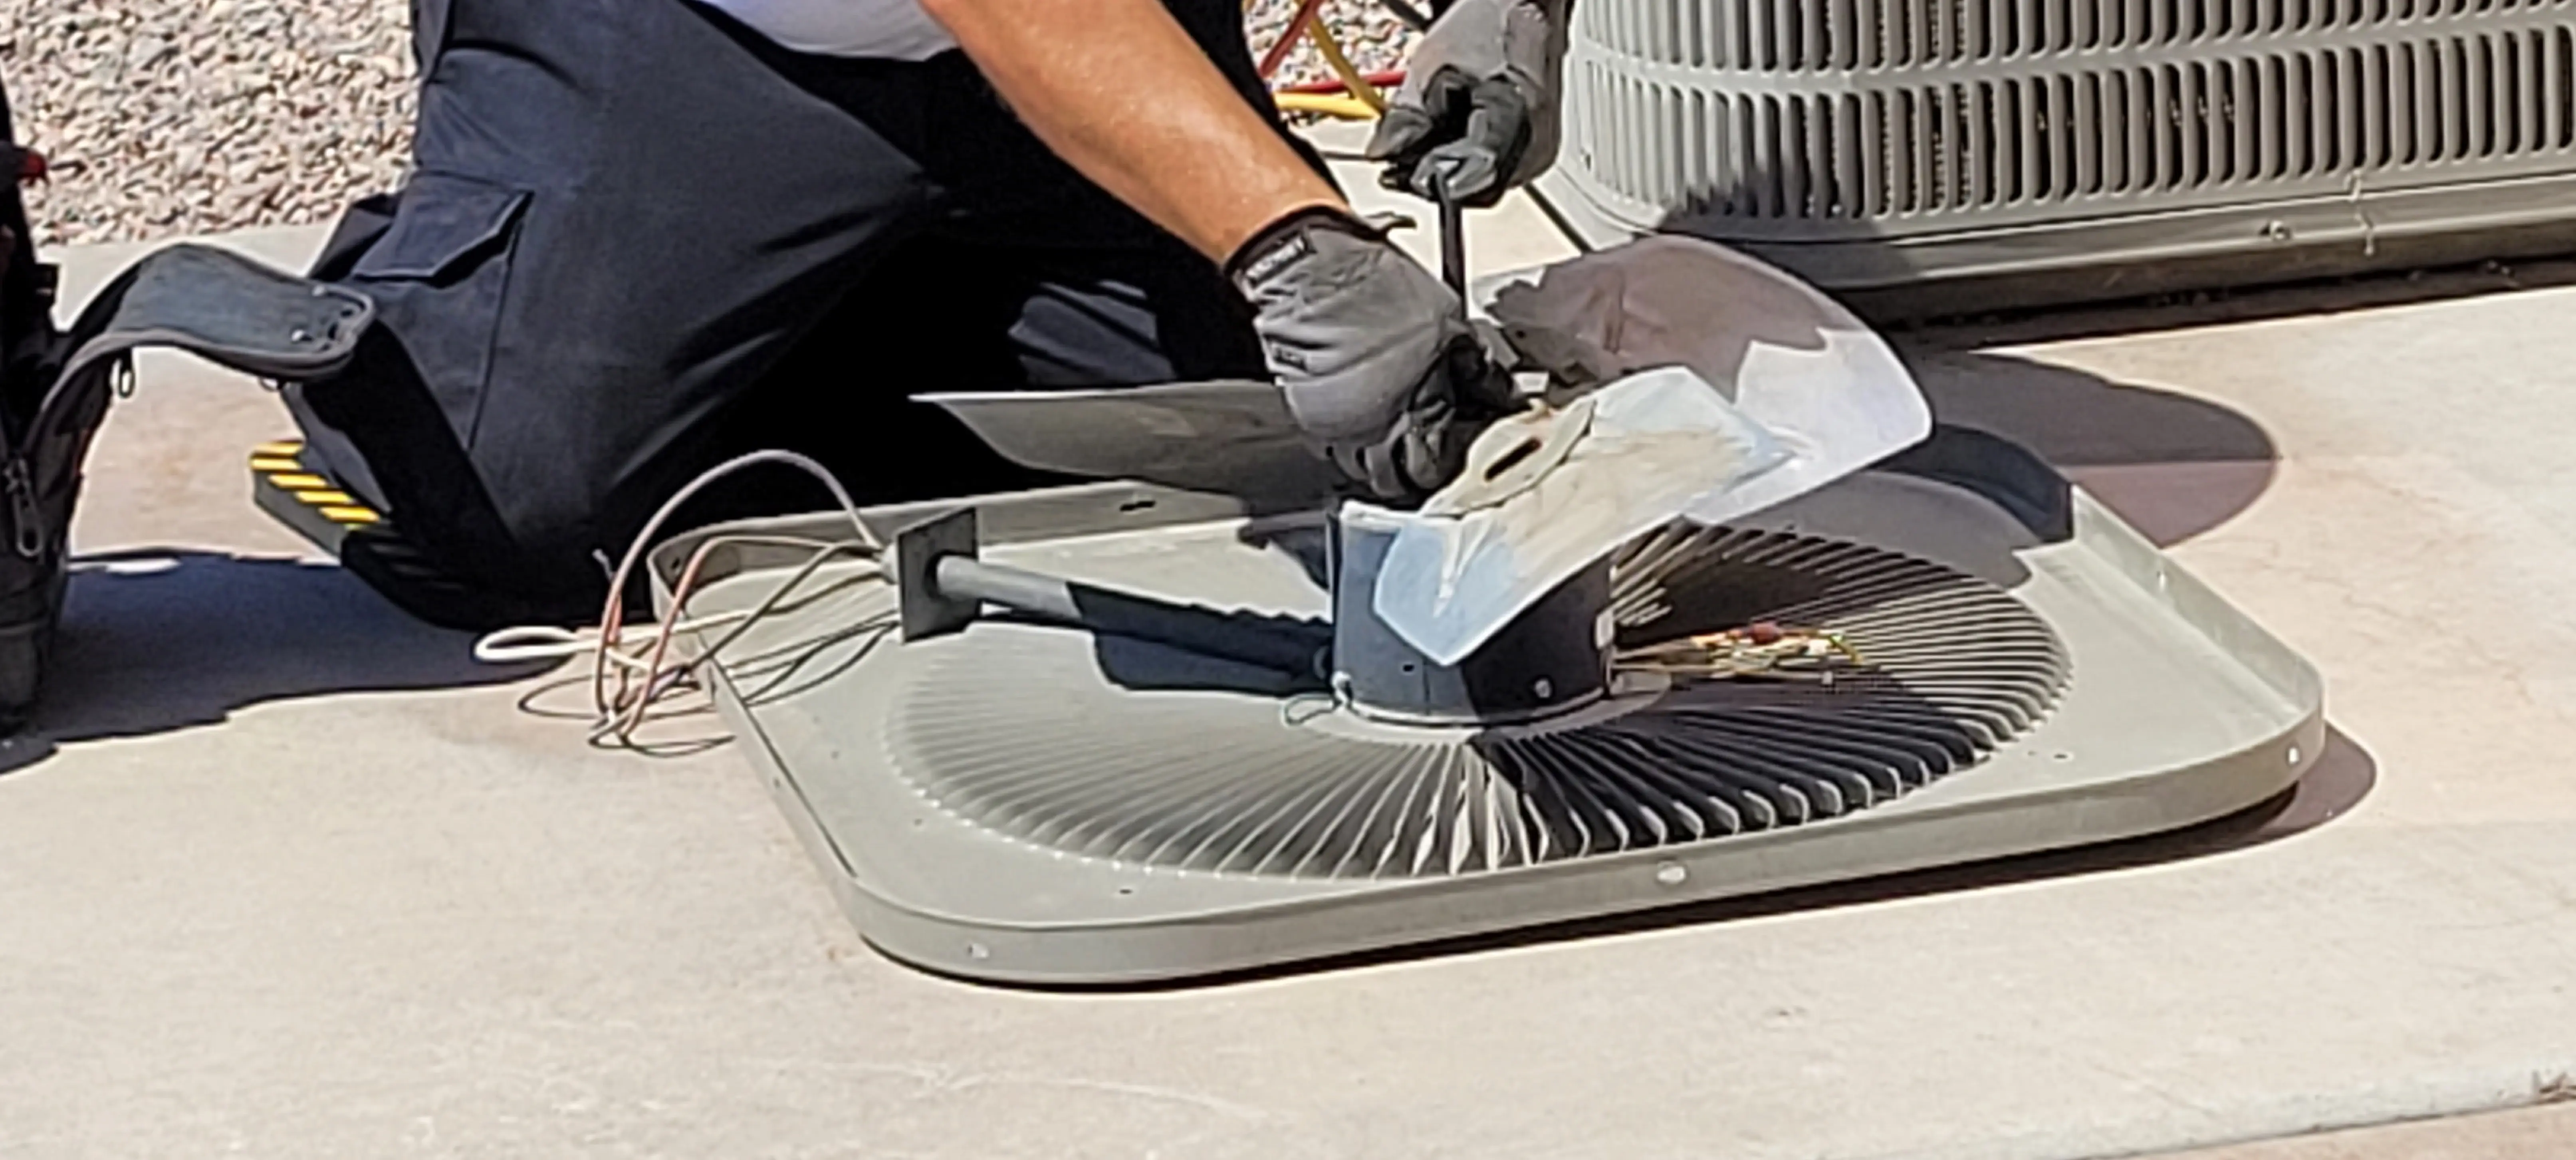 Air-Conditioning-Repair--in-Phoenix-Arizona-Air-Conditioning-Repair-5987604-image